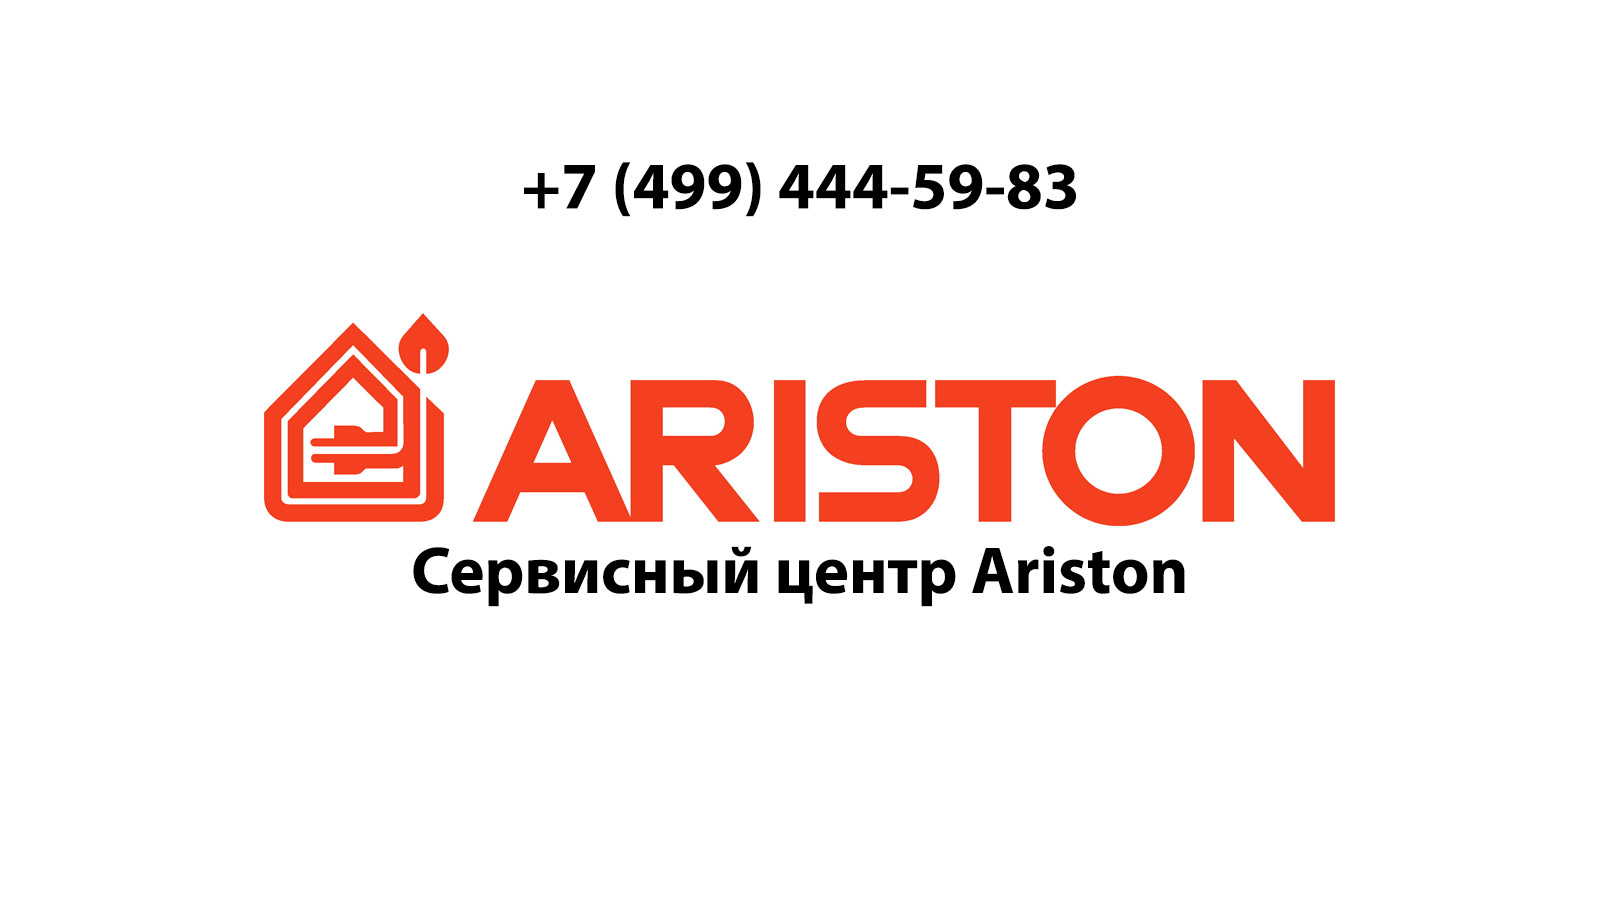 Ariston фирма. Ariston service. Реклама Аристон. Ariston котлы логотип. Сервисный центр Аристон.